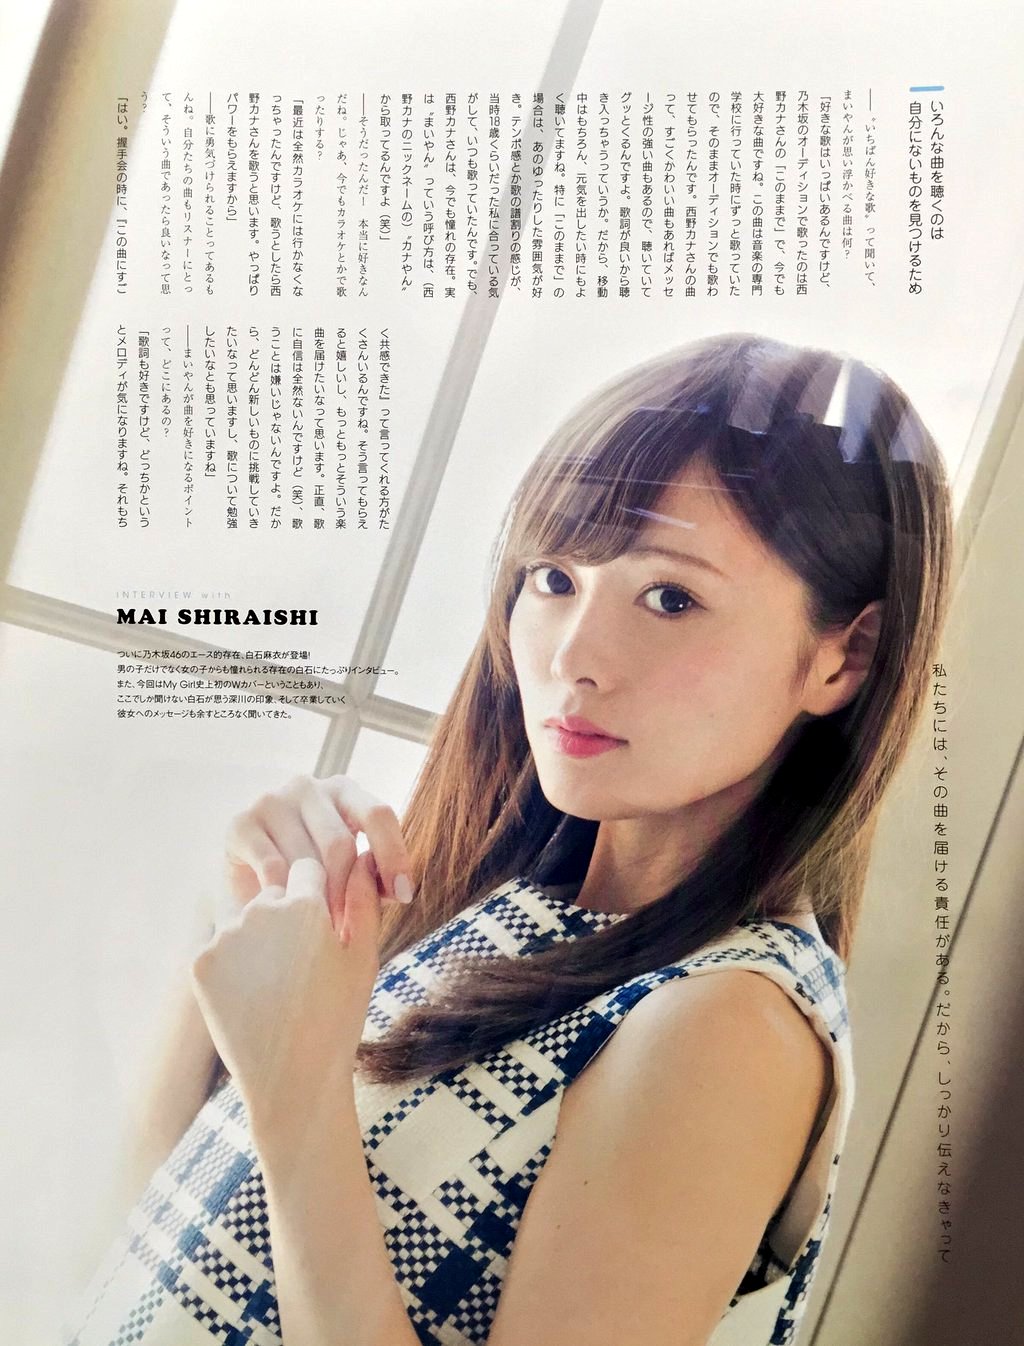 Beautiful ace. Mariko Shiraishi чулках. Shiraishi mai Memorial Magazine scans. Hitomi Shiraishi article talk.